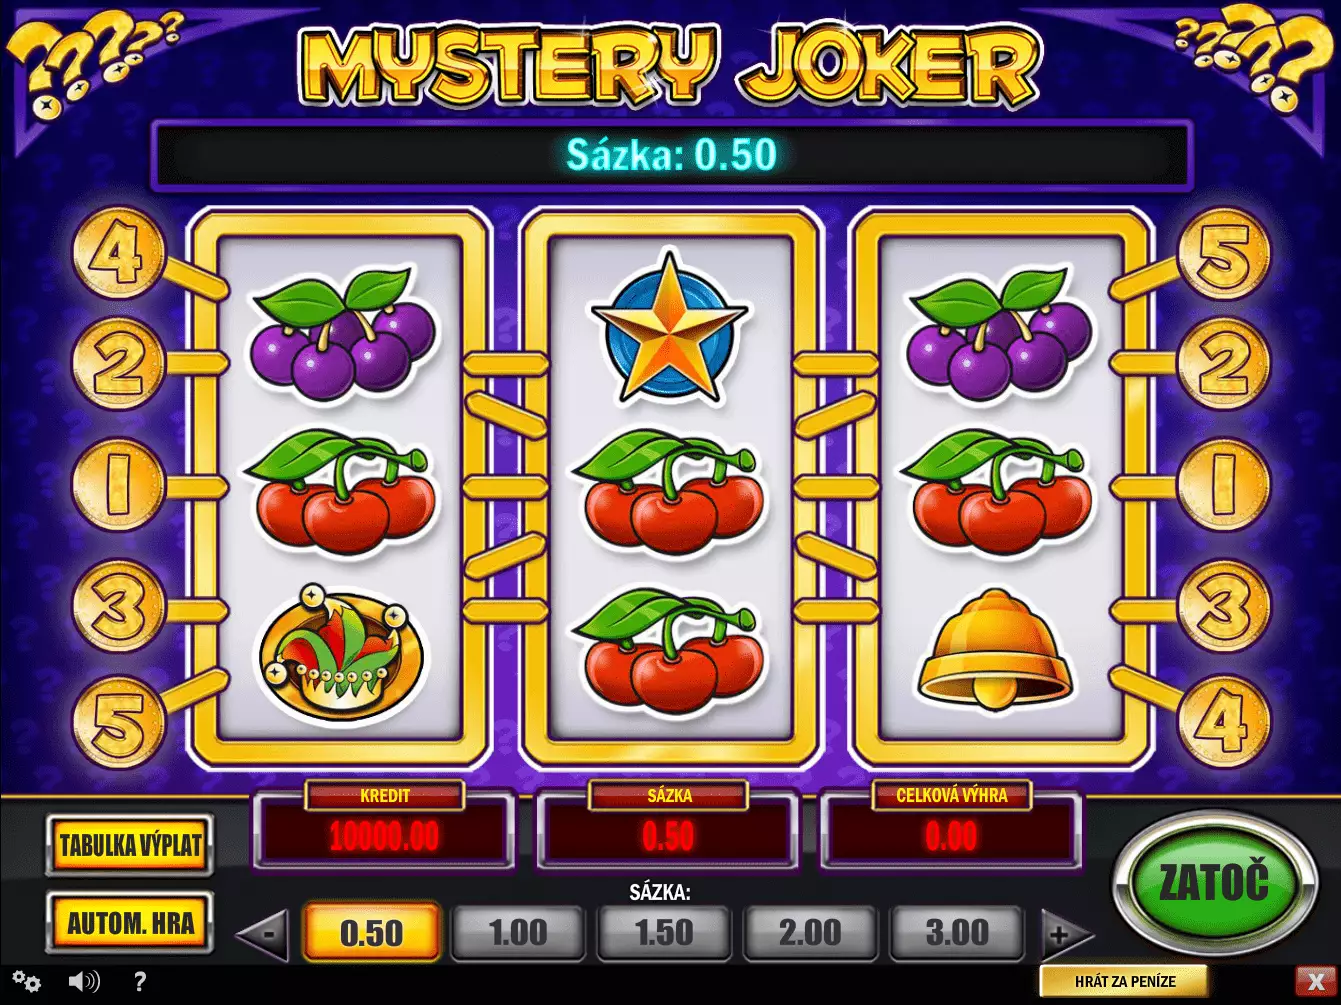 Play'n GO automat Mystery Joker - hrajte zdarma v Tipsport Vegas